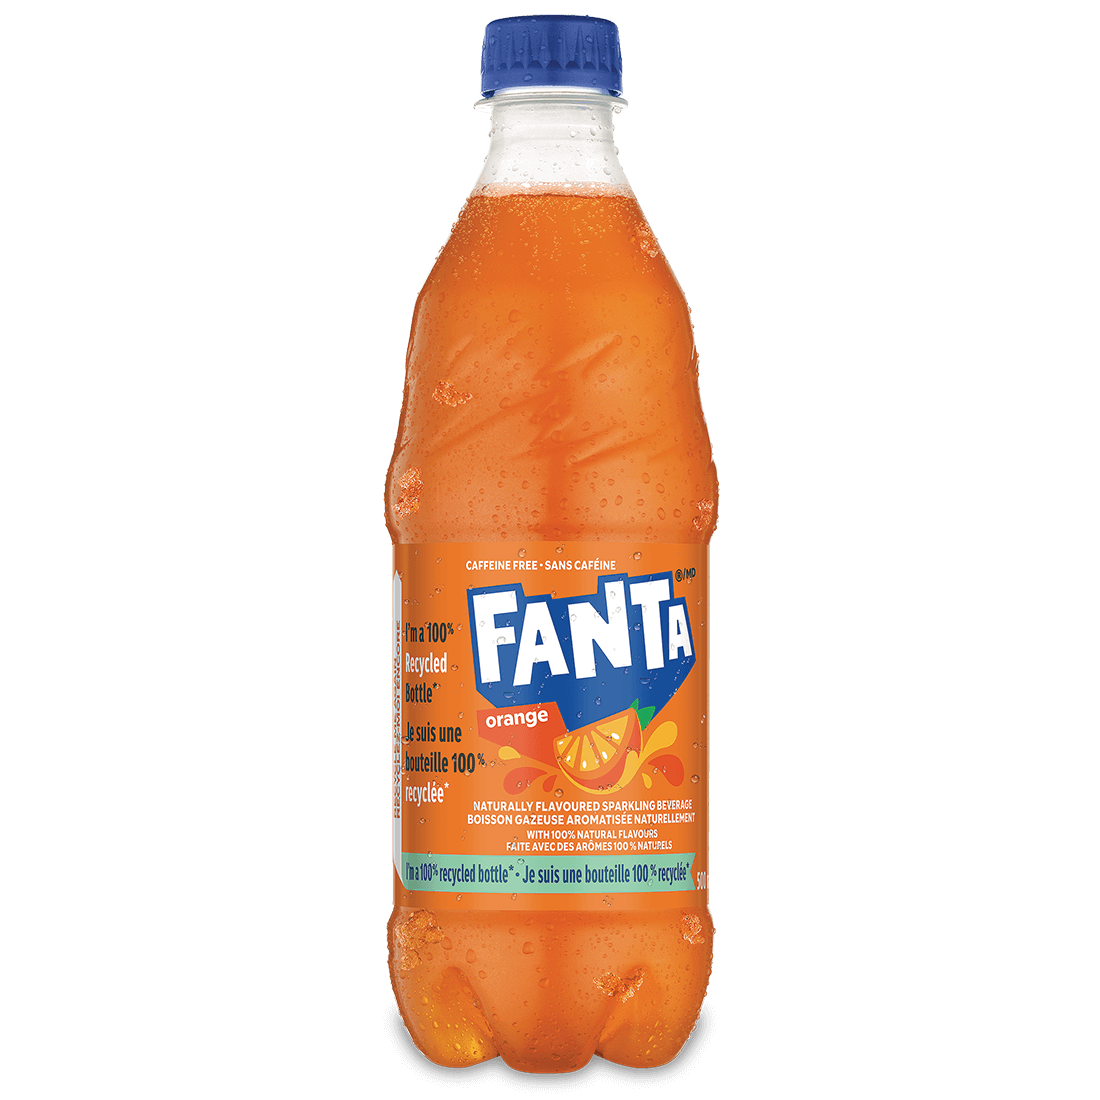 Fanta Orange 500 mL bottle